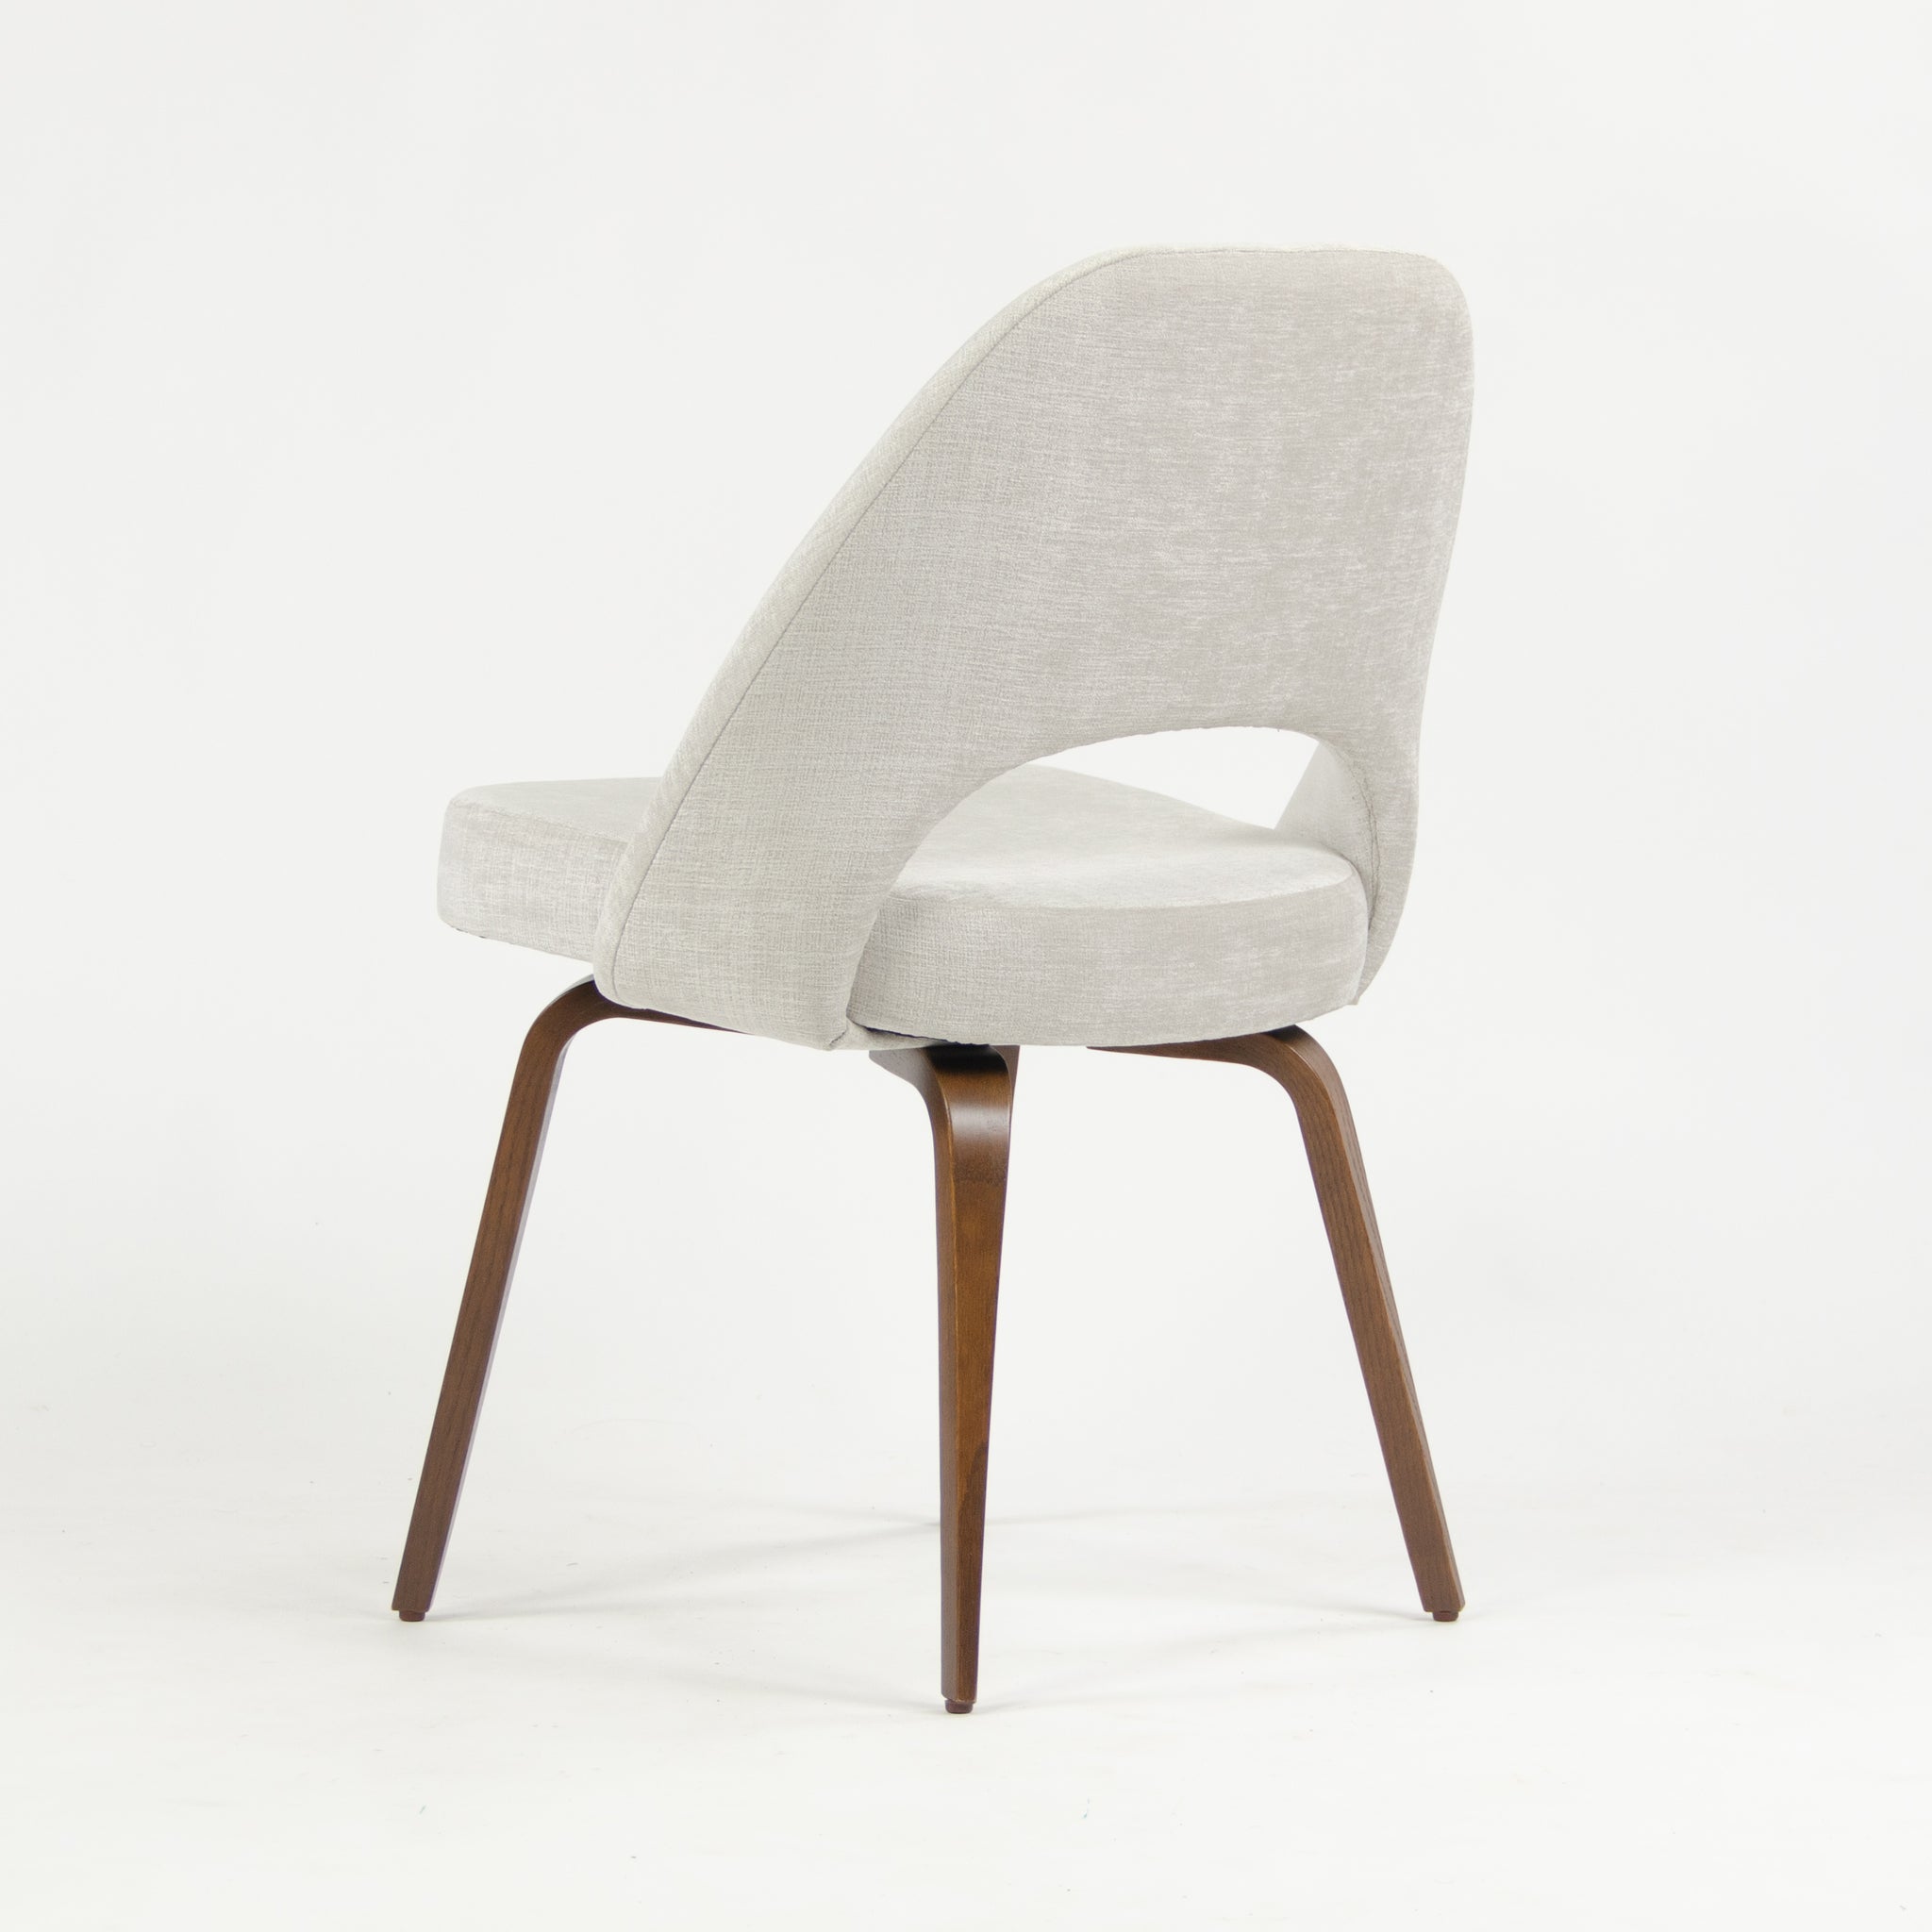 SOLD 2018 Knoll Studio Saarinen Armless Executive Chairs w Wood Legs Walnut